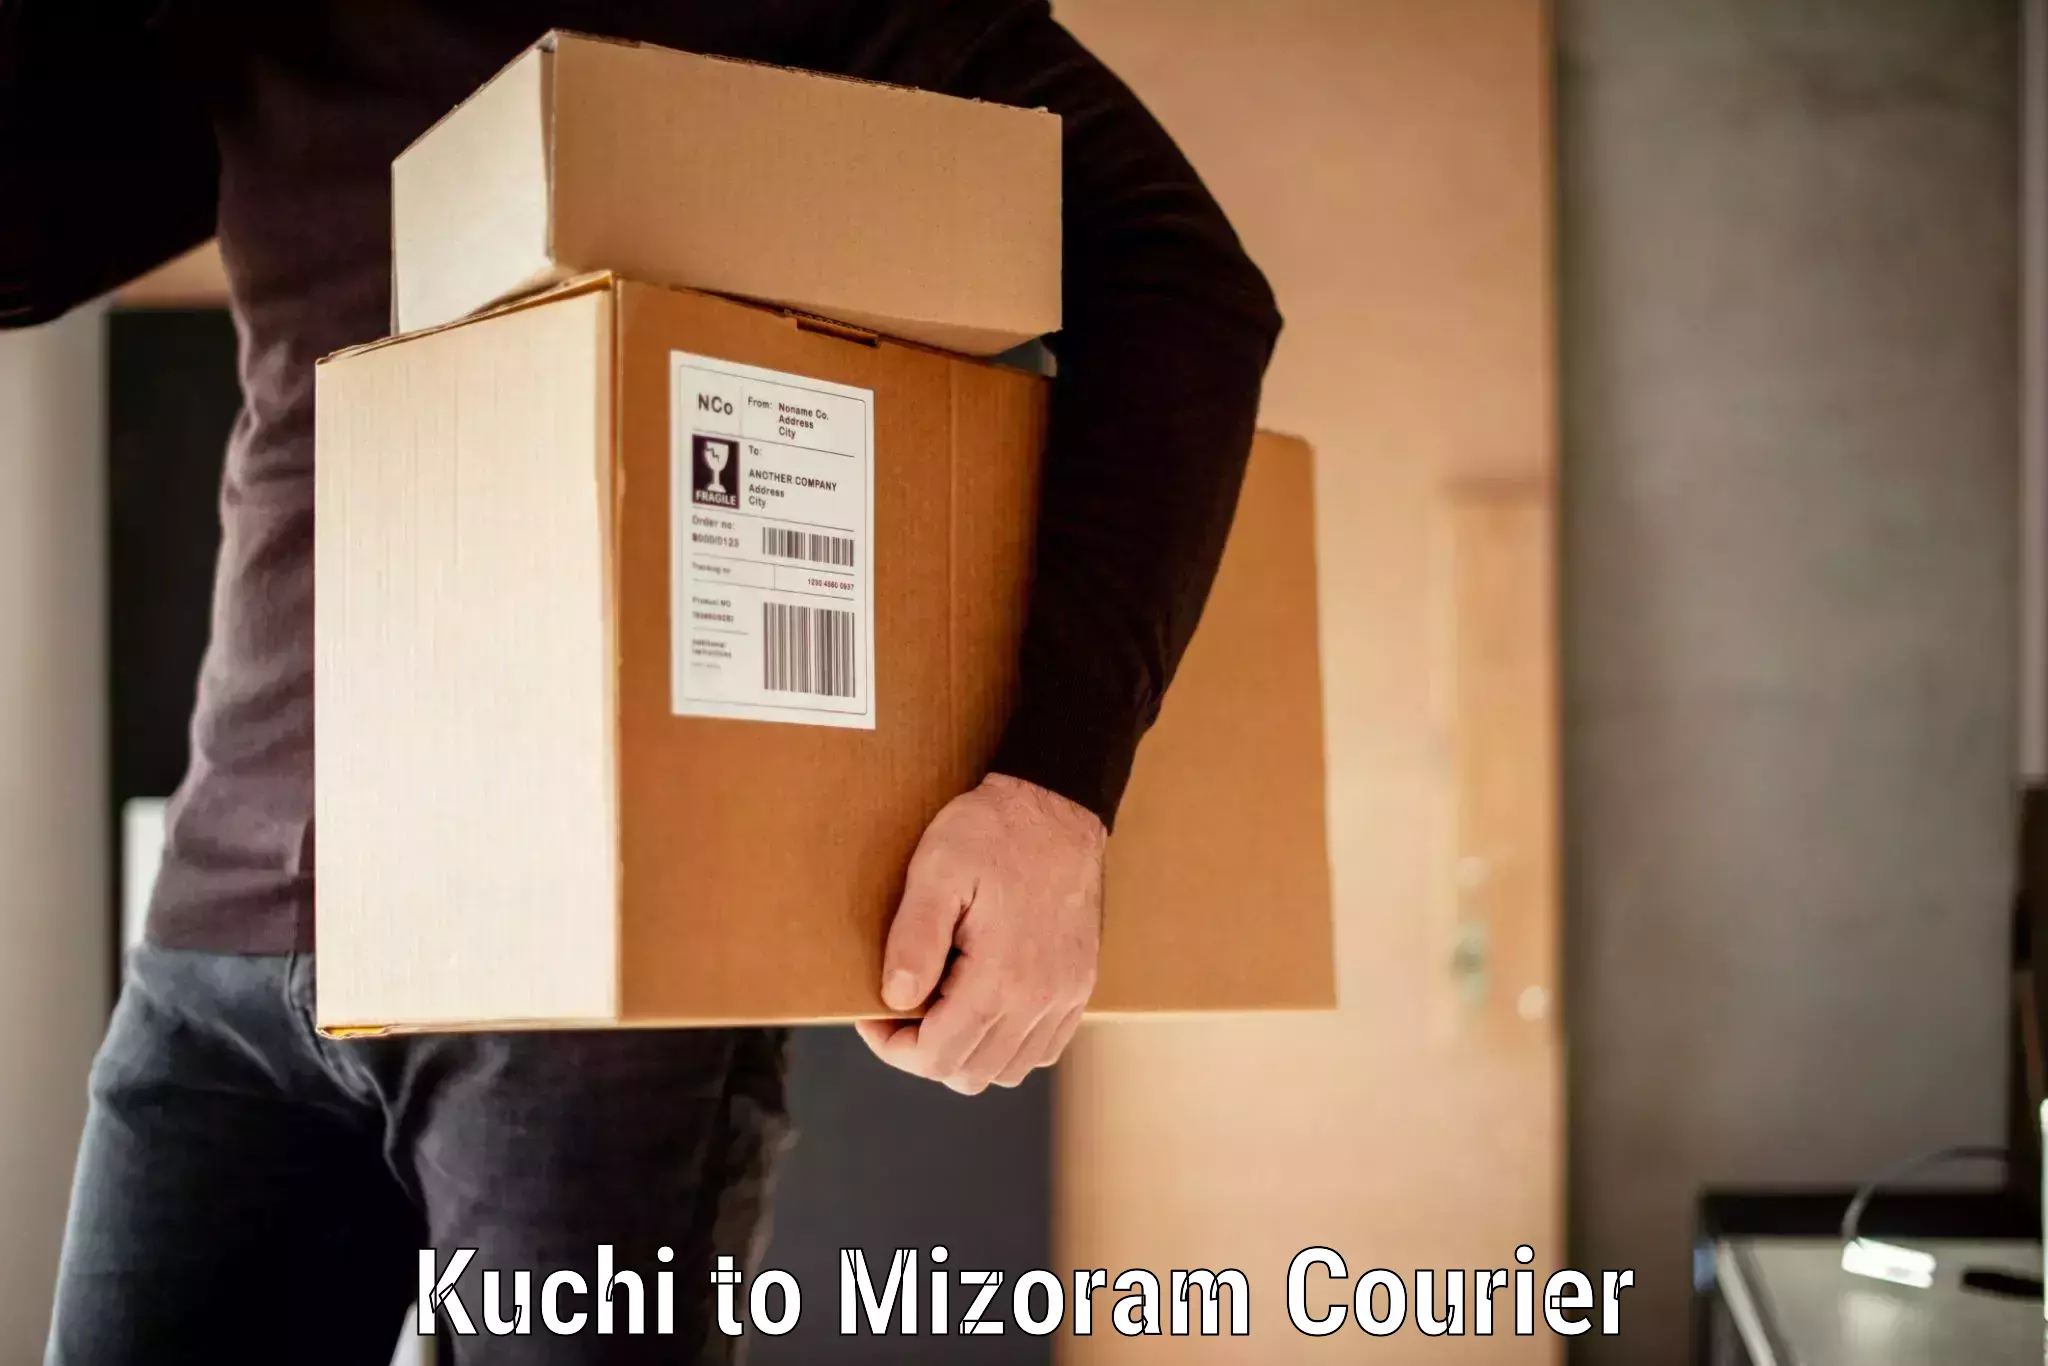 Baggage relocation service Kuchi to Mizoram